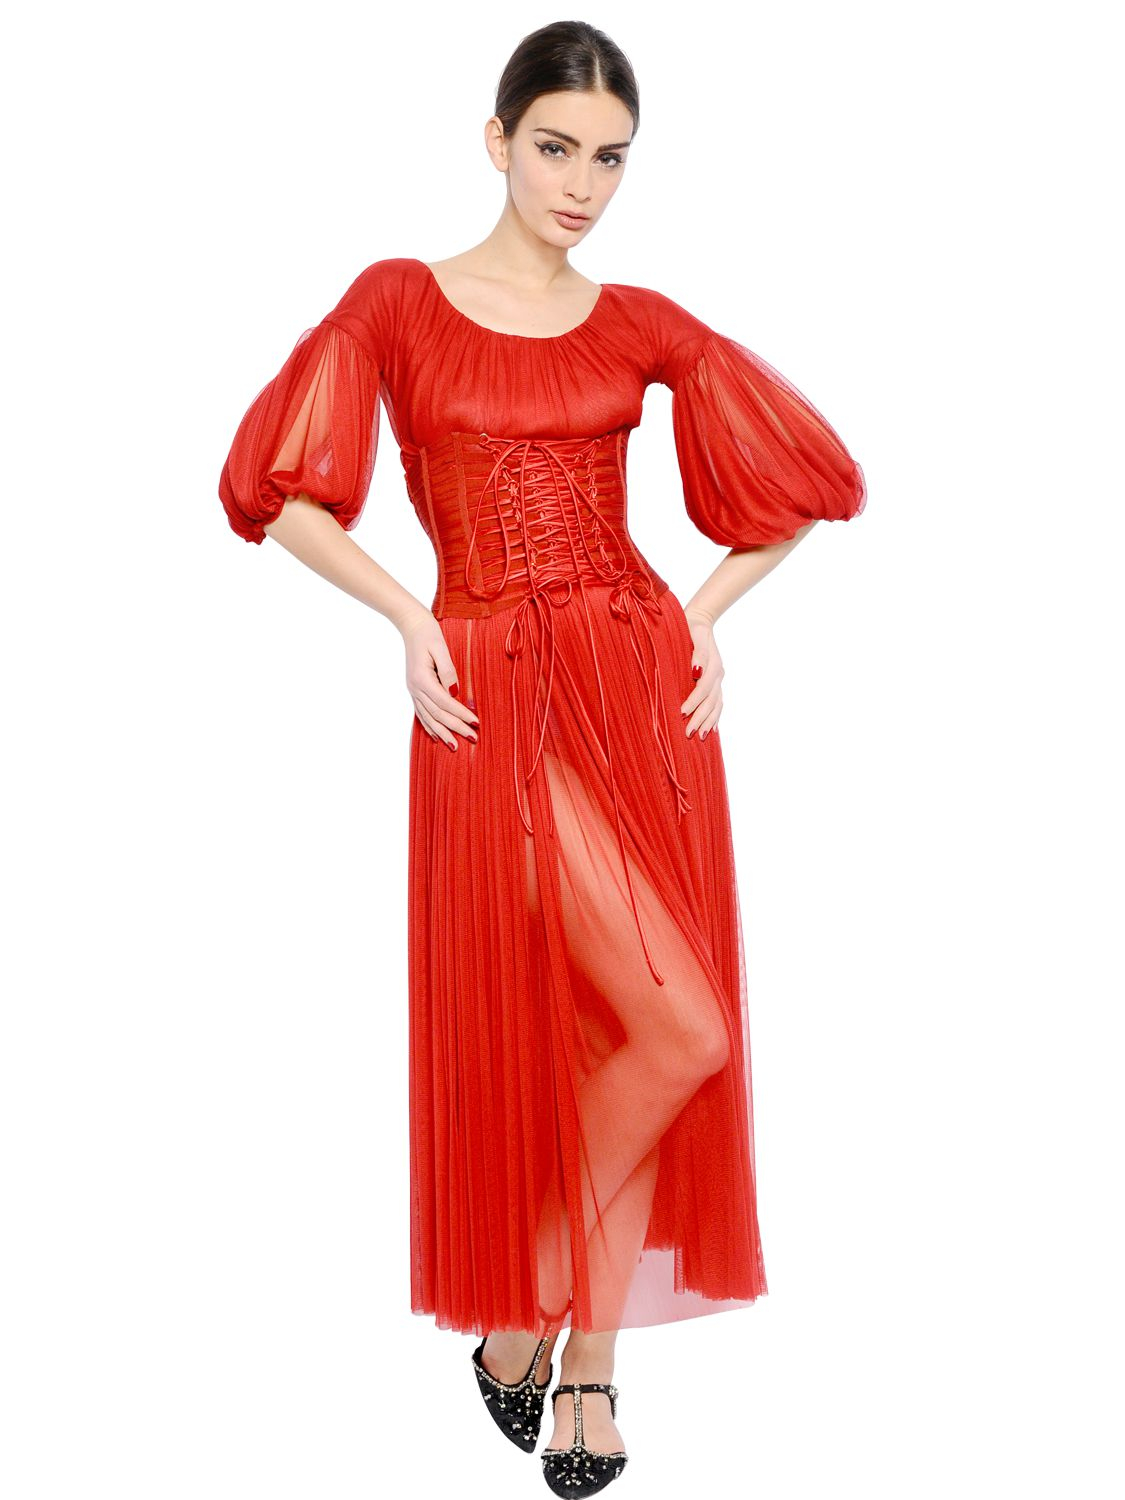 Lyst - Dolce & Gabbana Silk Tulle Bustier Dress in Red